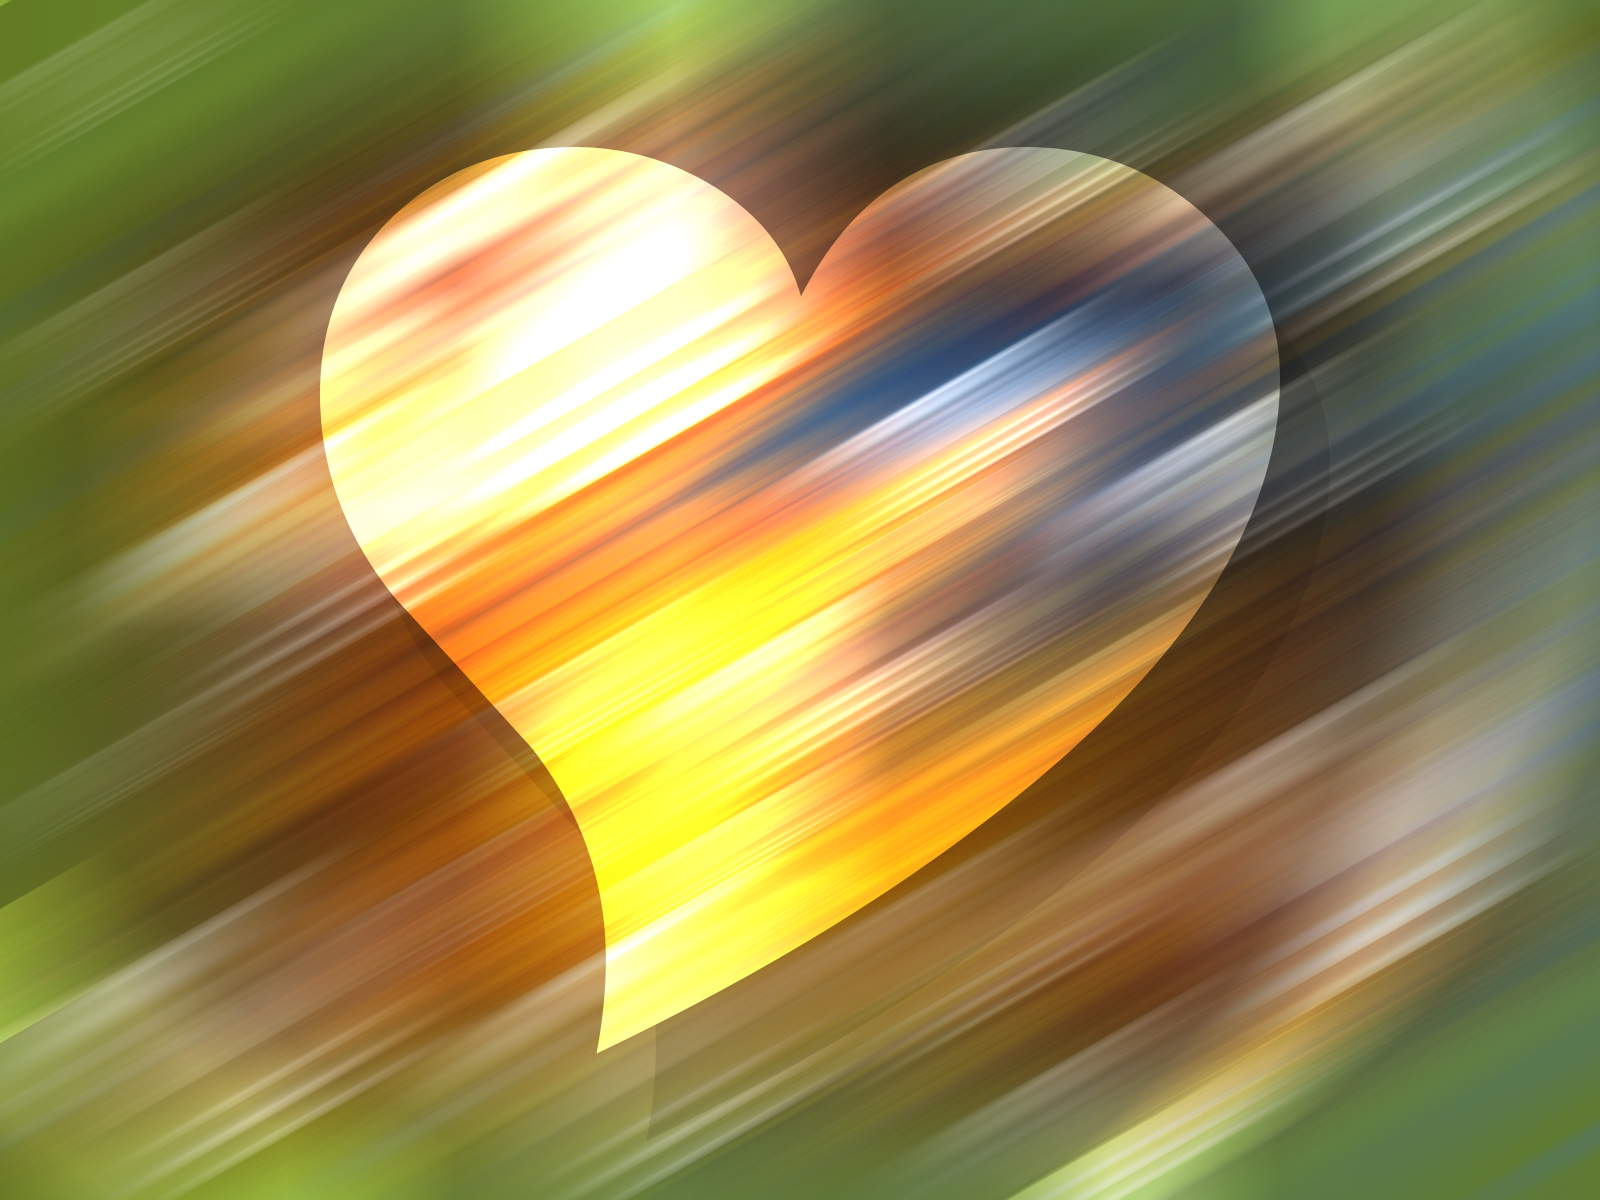 Heart symbol on color streak background